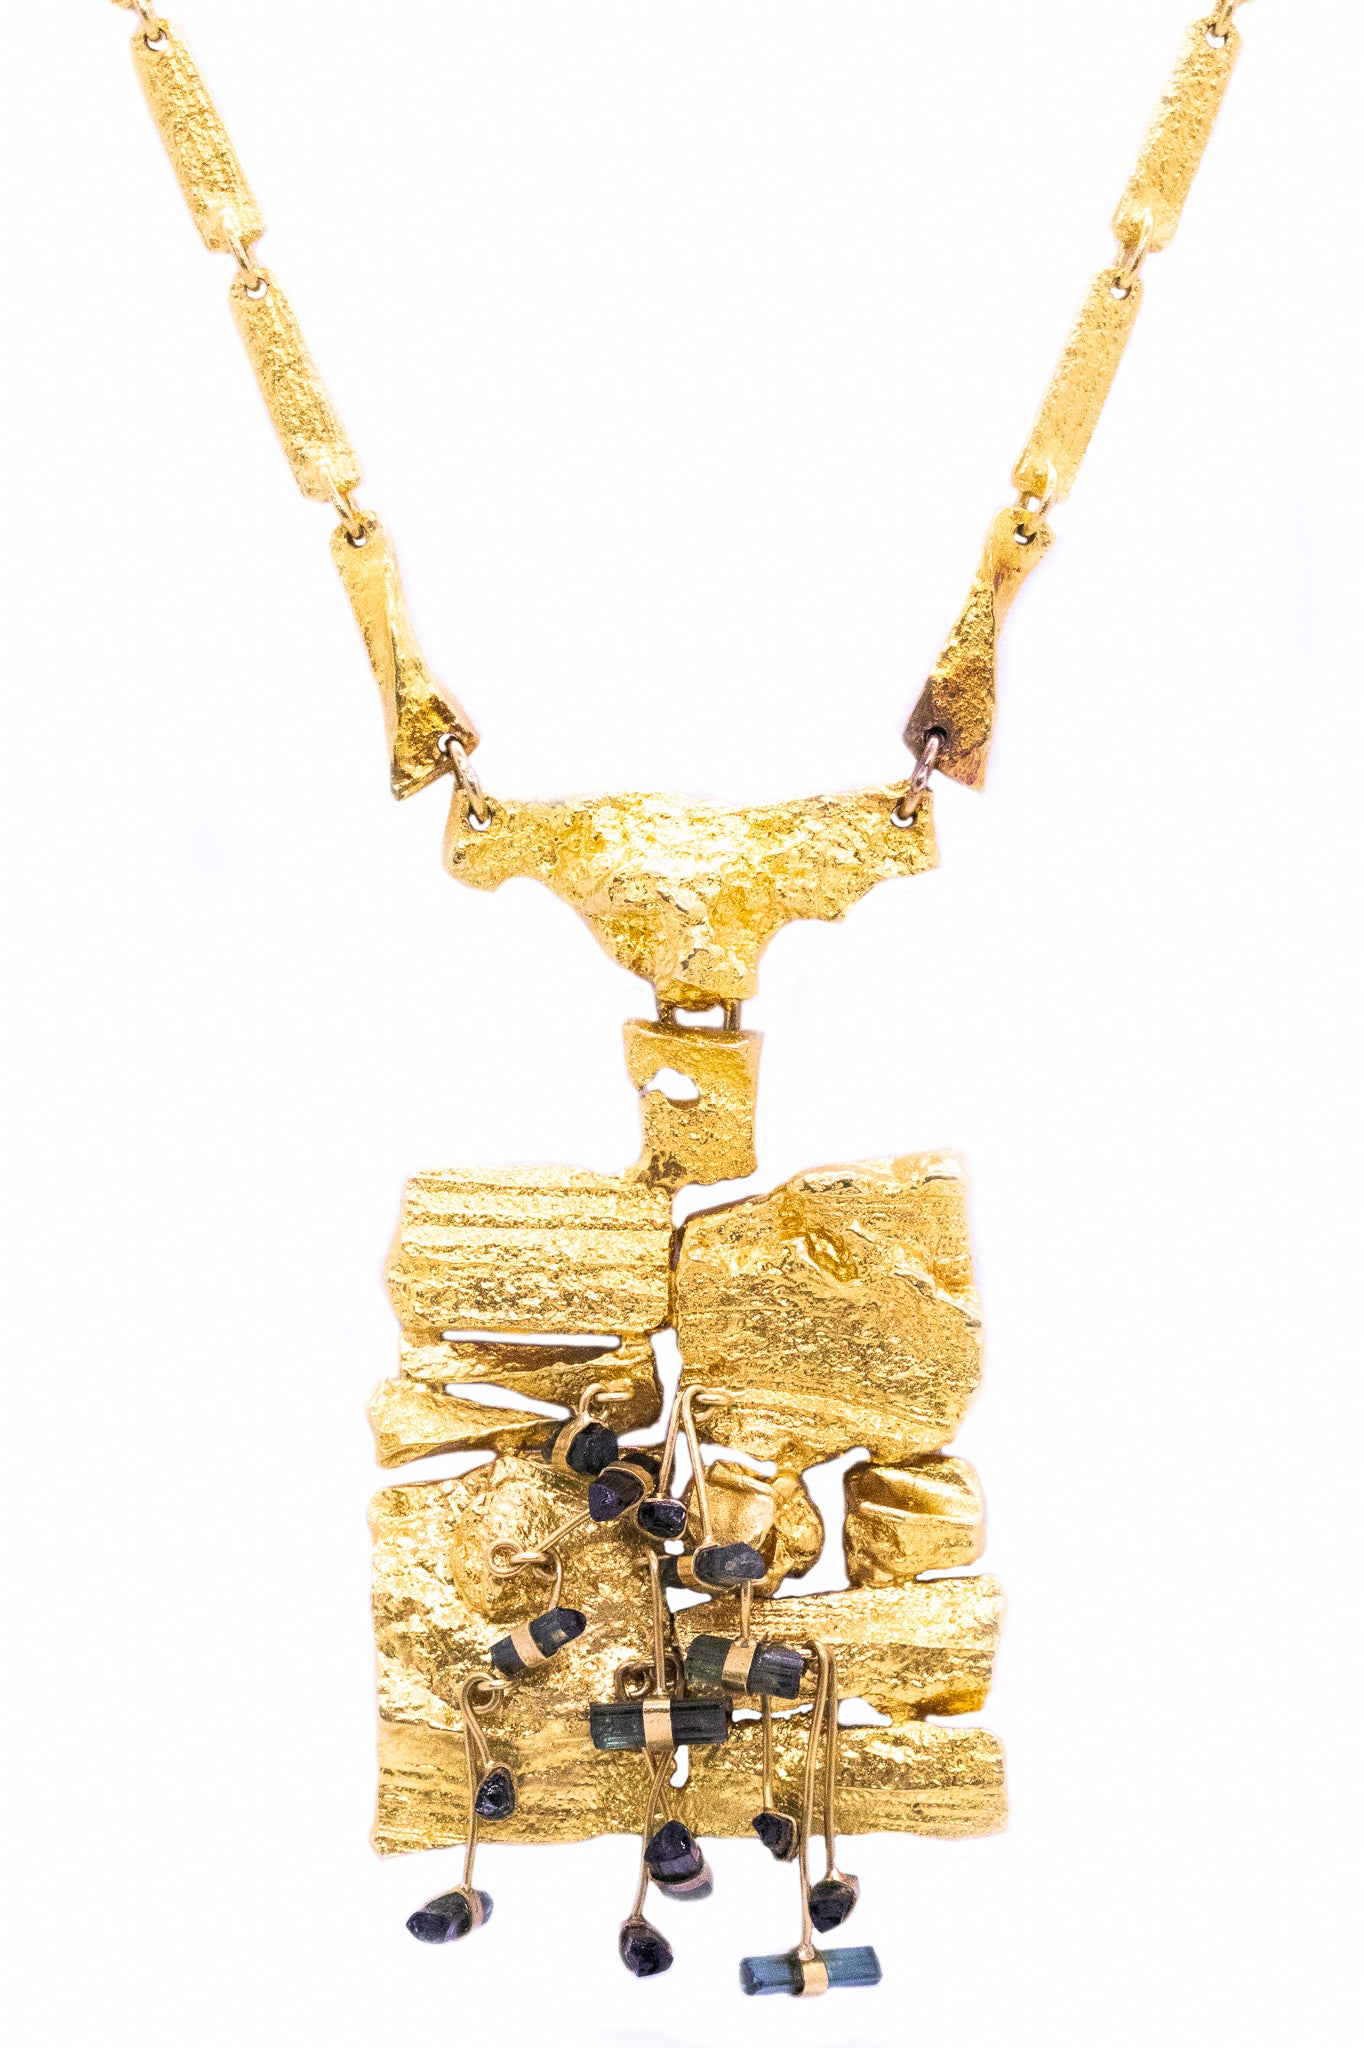 Bjorn Weckstrom 1967 Finland Rare Kukkiva Muuri Necklace In 18Kt Yellow Gold With Tourmaline